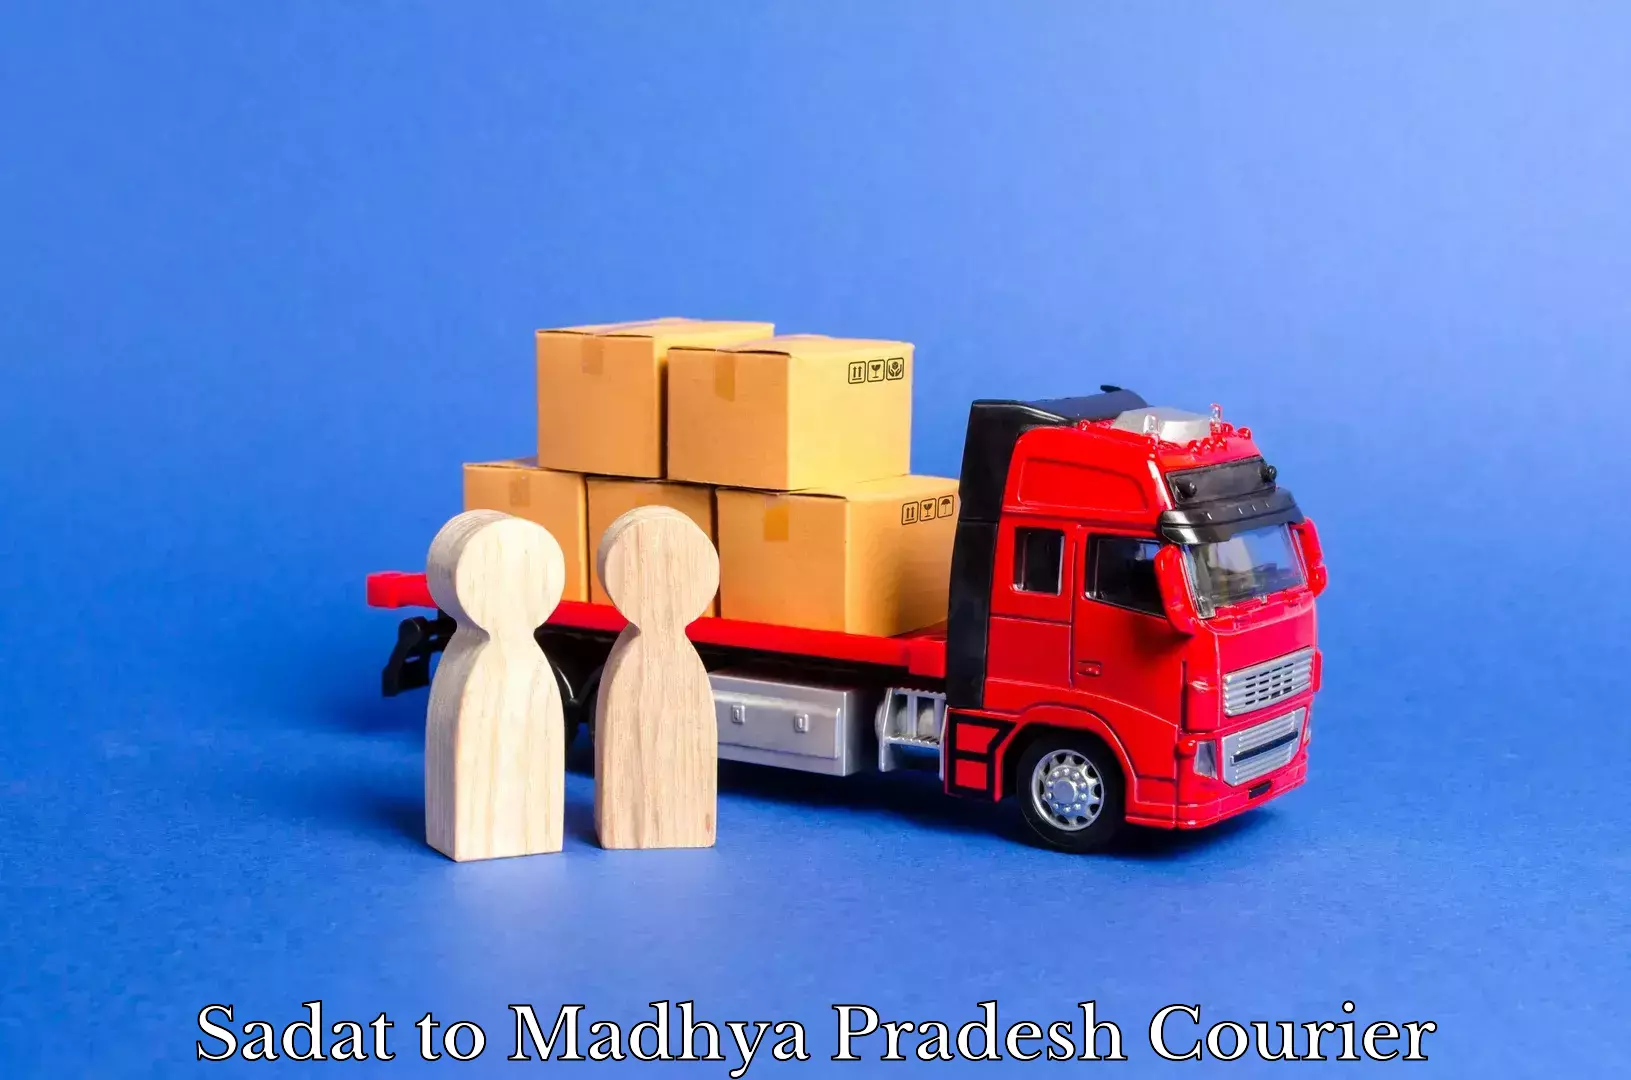 Overnight delivery services Sadat to Madhya Pradesh